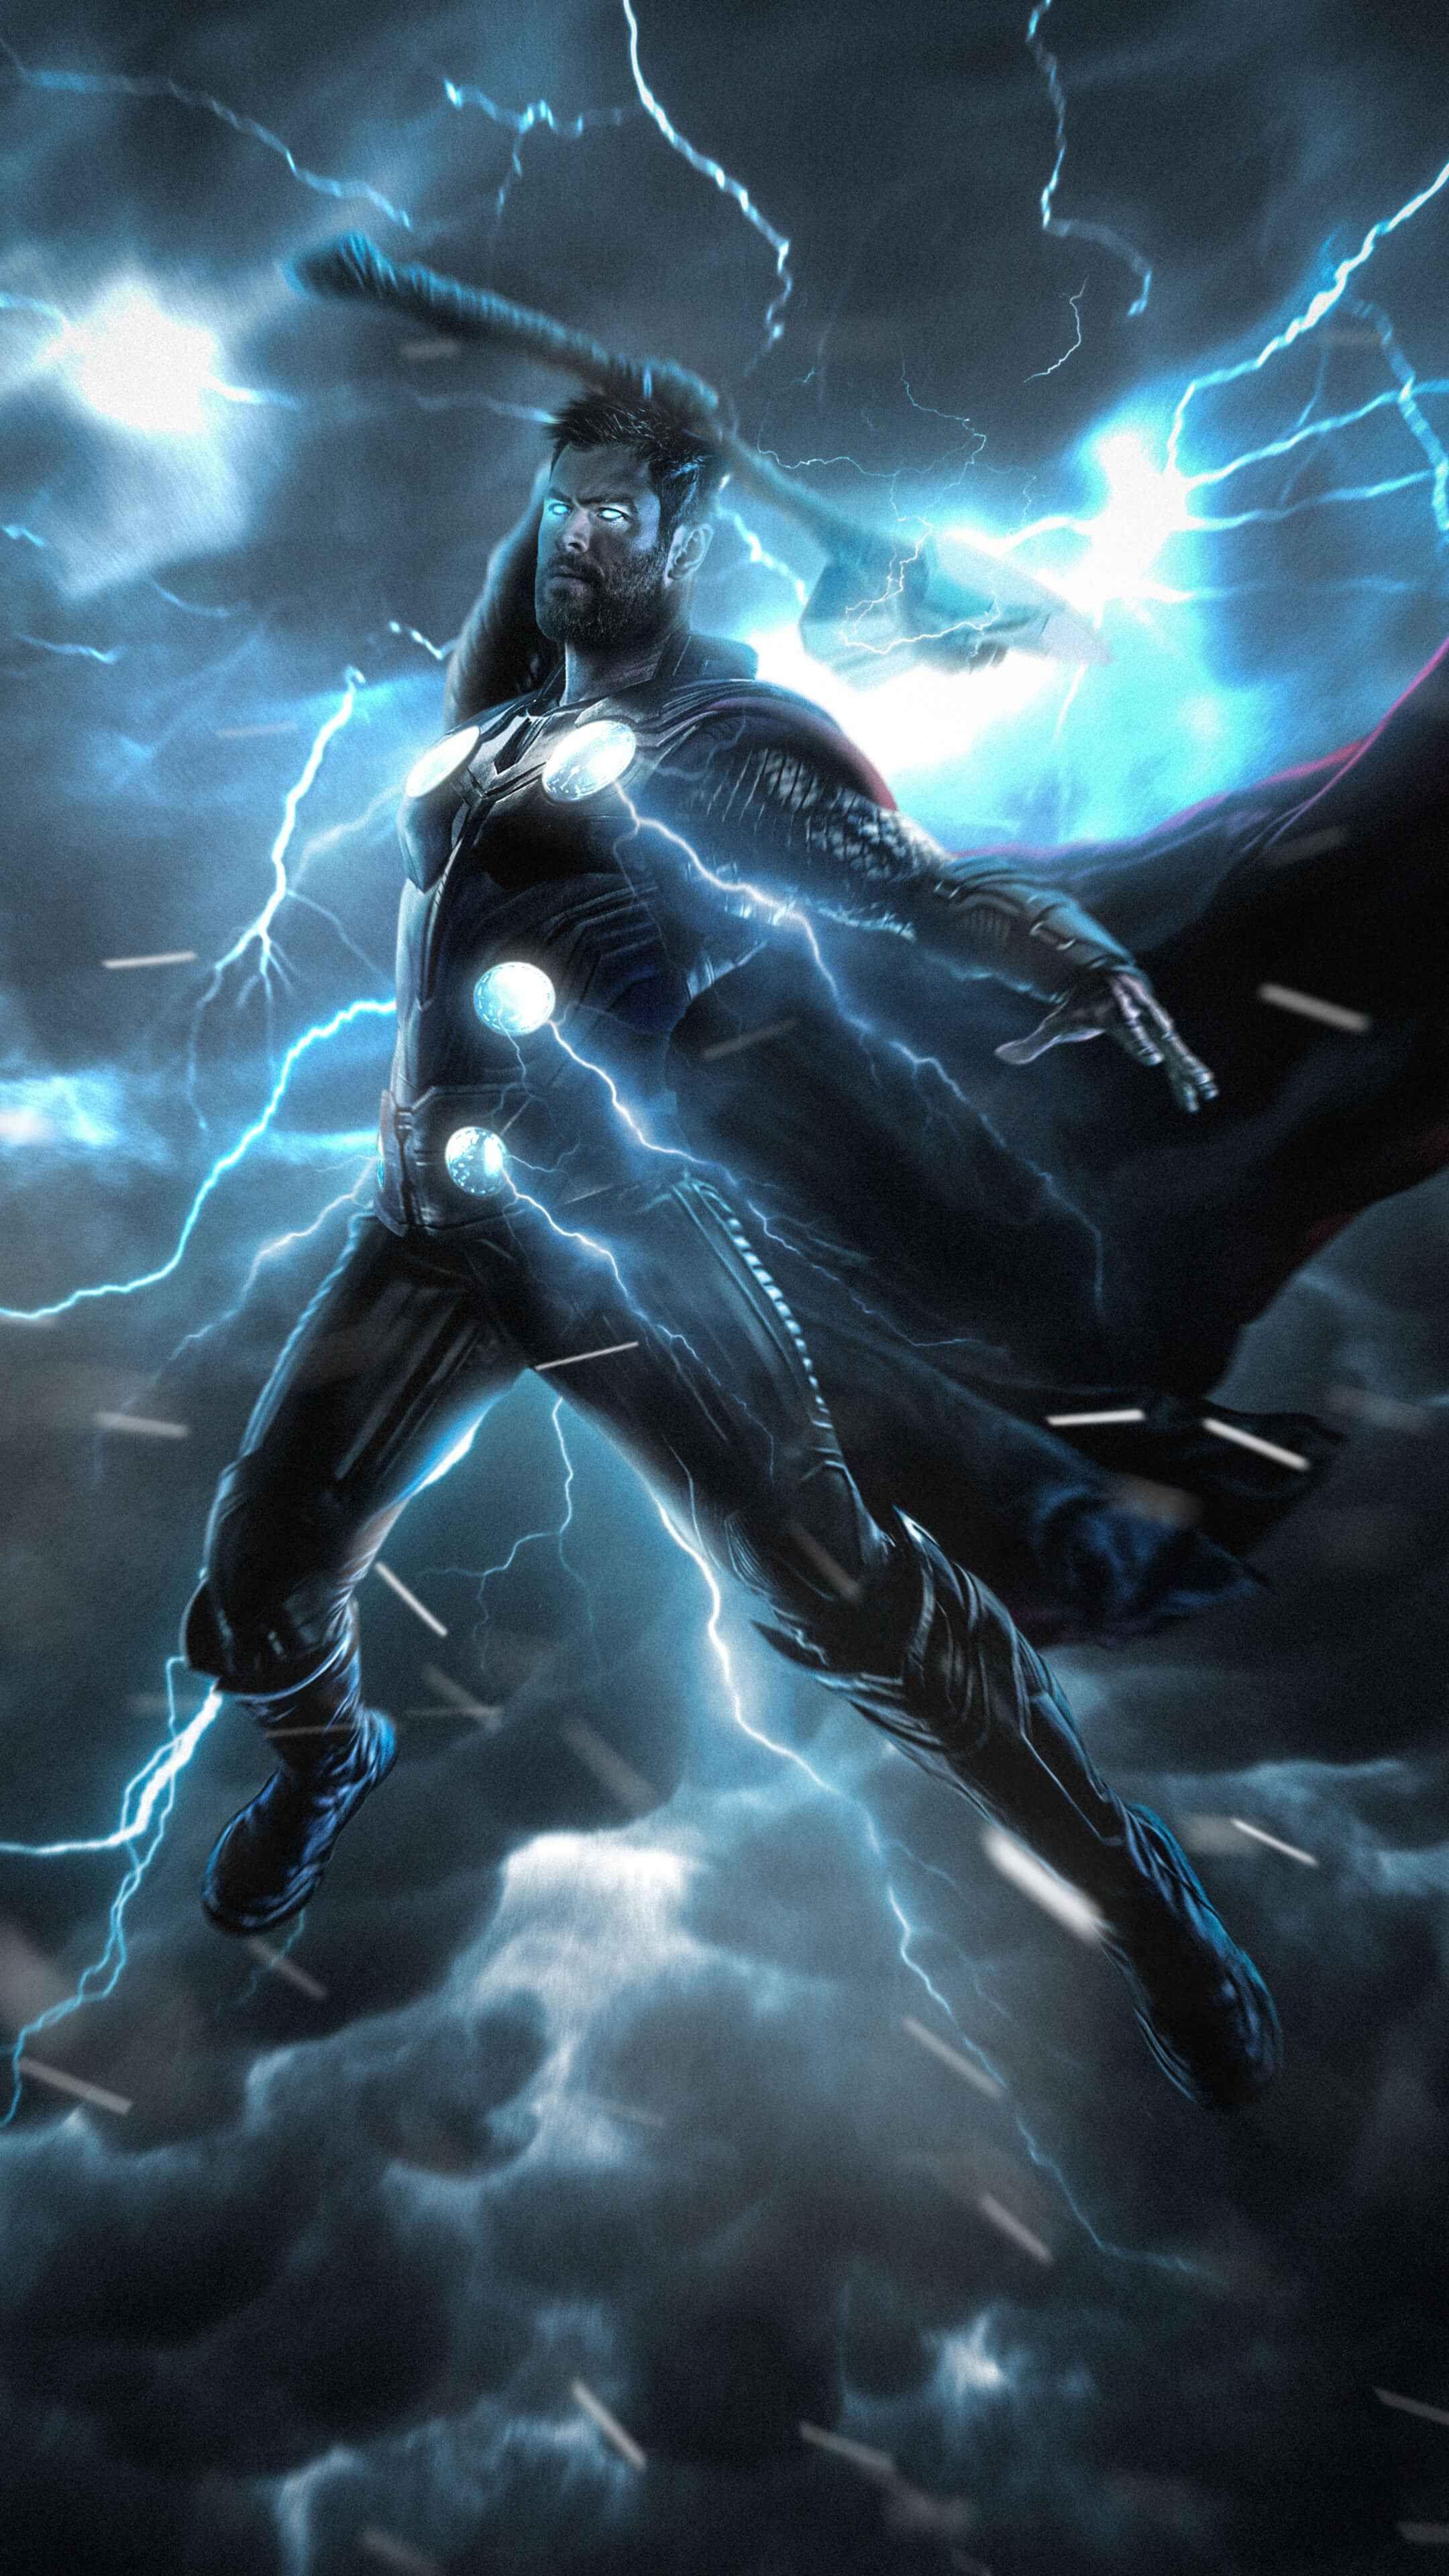 Free download Avengers Endgame Thor Stormbreaker iPhone